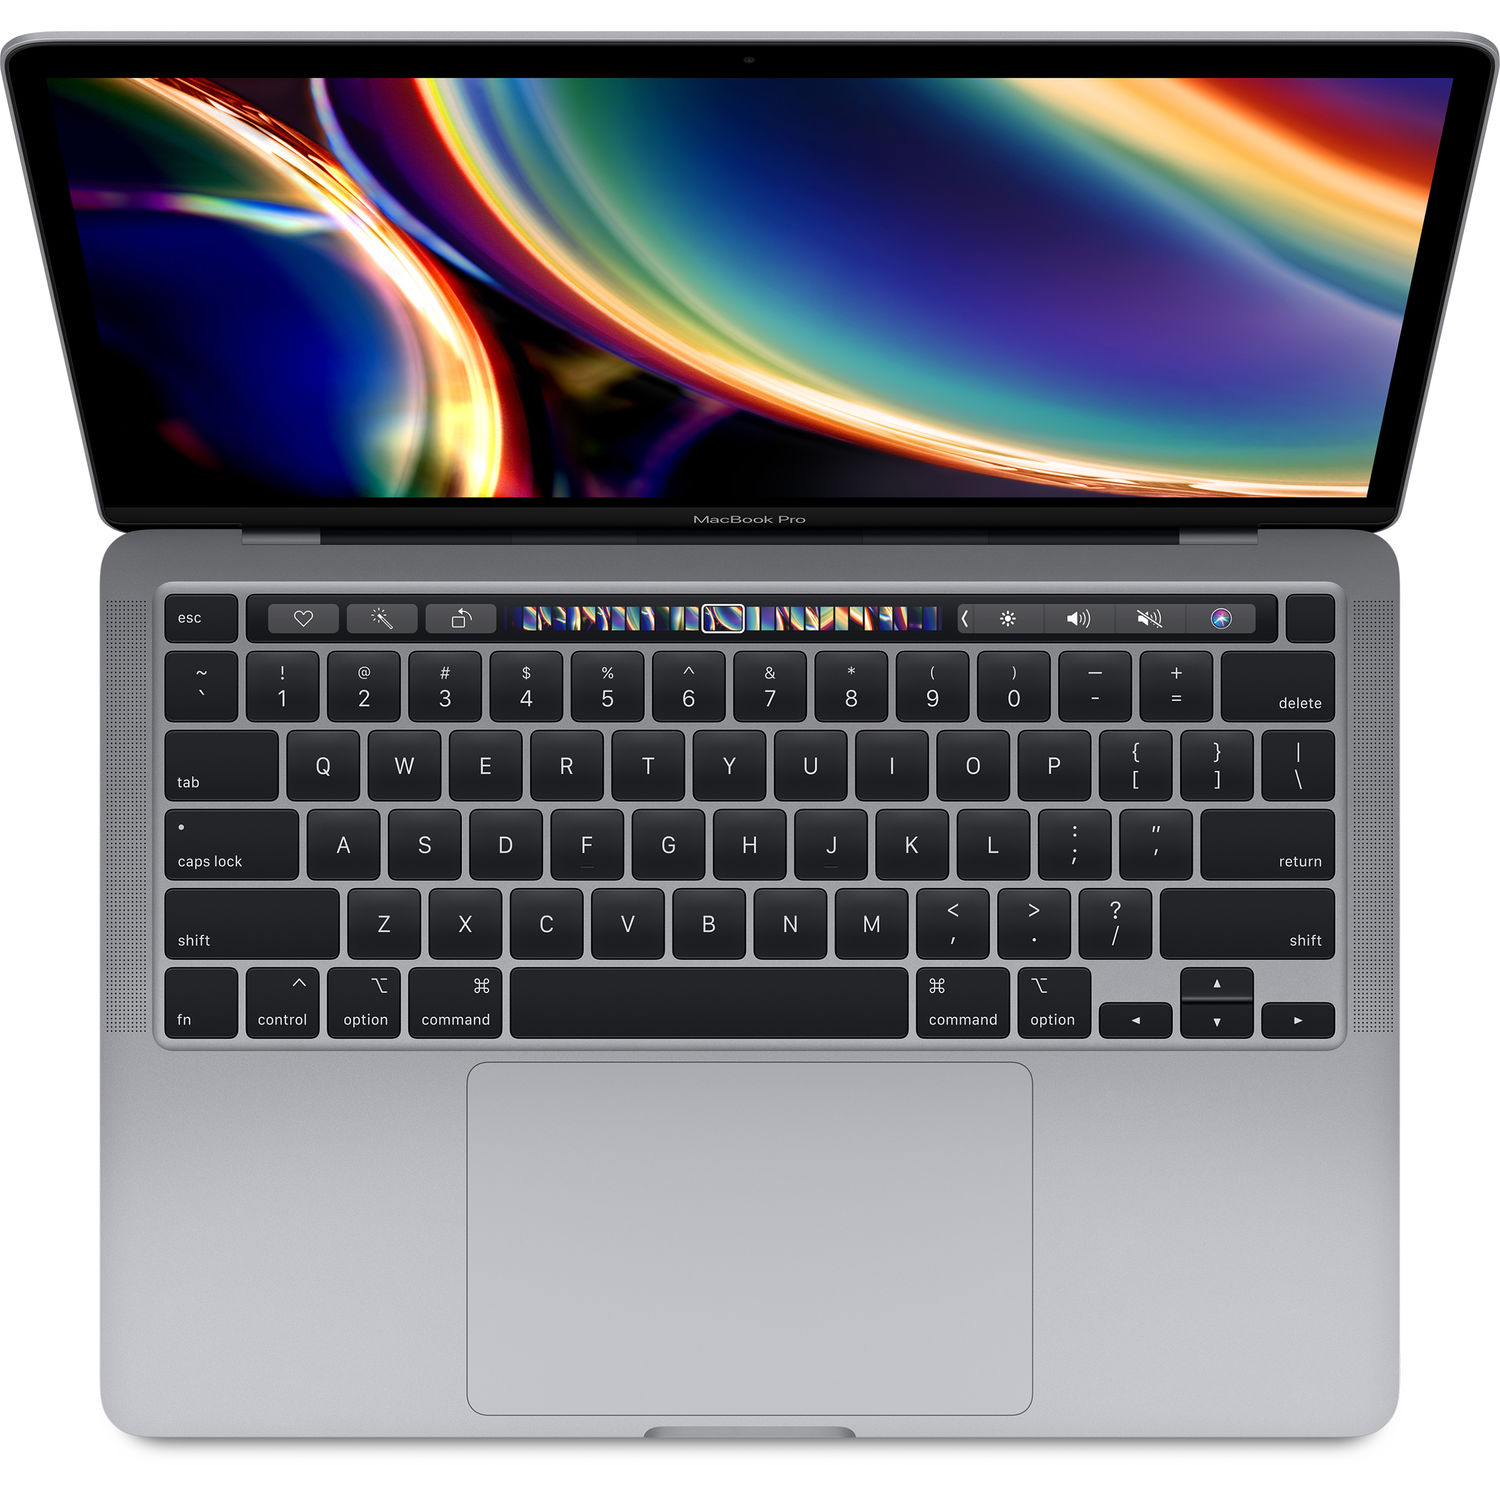 Apple MacBook Pro 13" Touch Bar 2020 🍎 Intel Core i5 256GB Space Gray MXK32LL/A 190199521650 | eBay